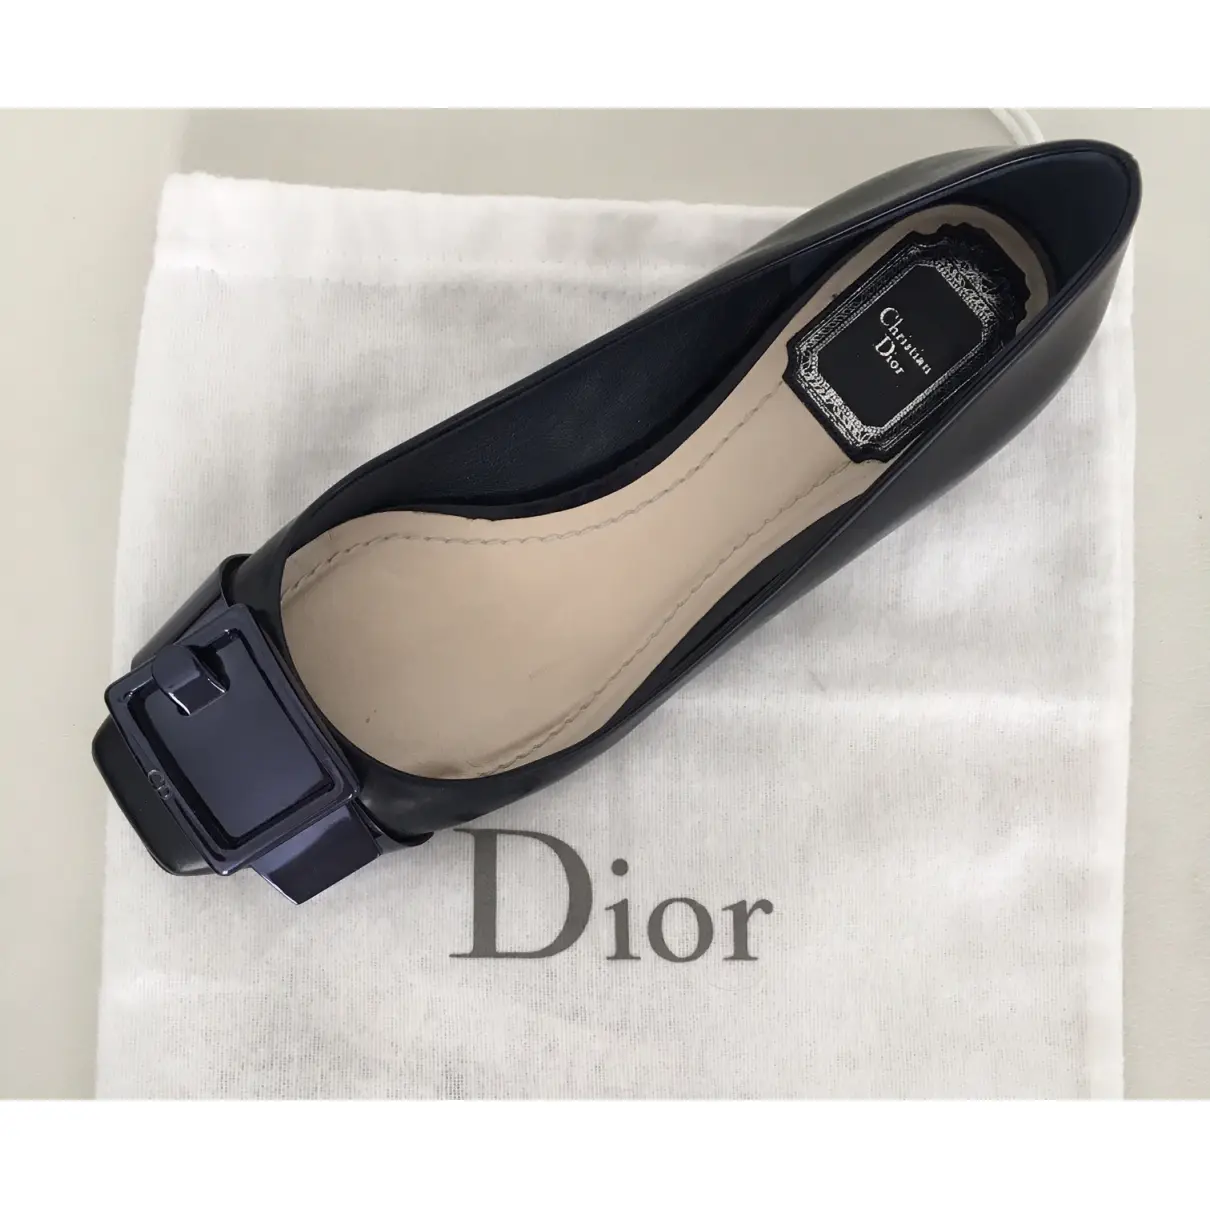 Buy Dior Leather ballet flats online